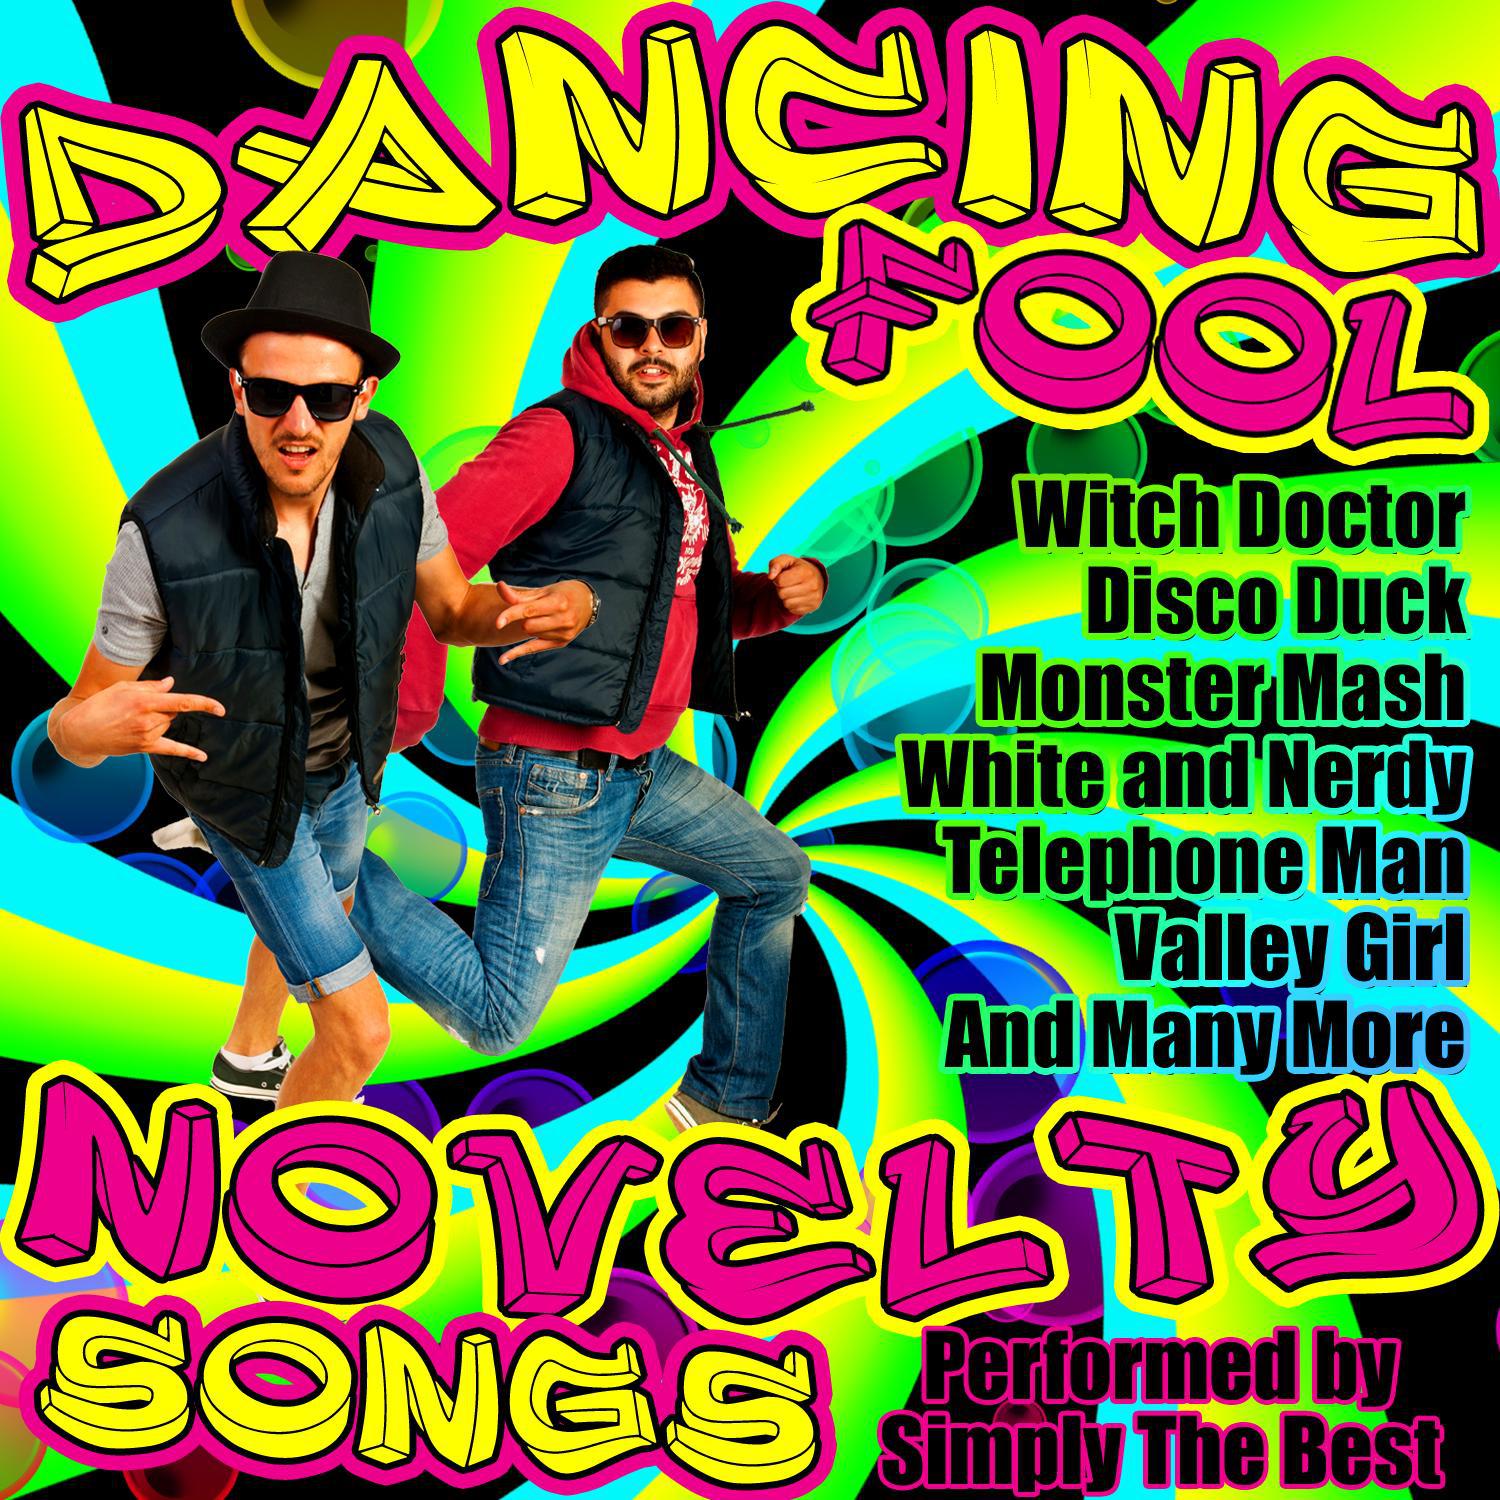 Dancing Fool Novelty Songs